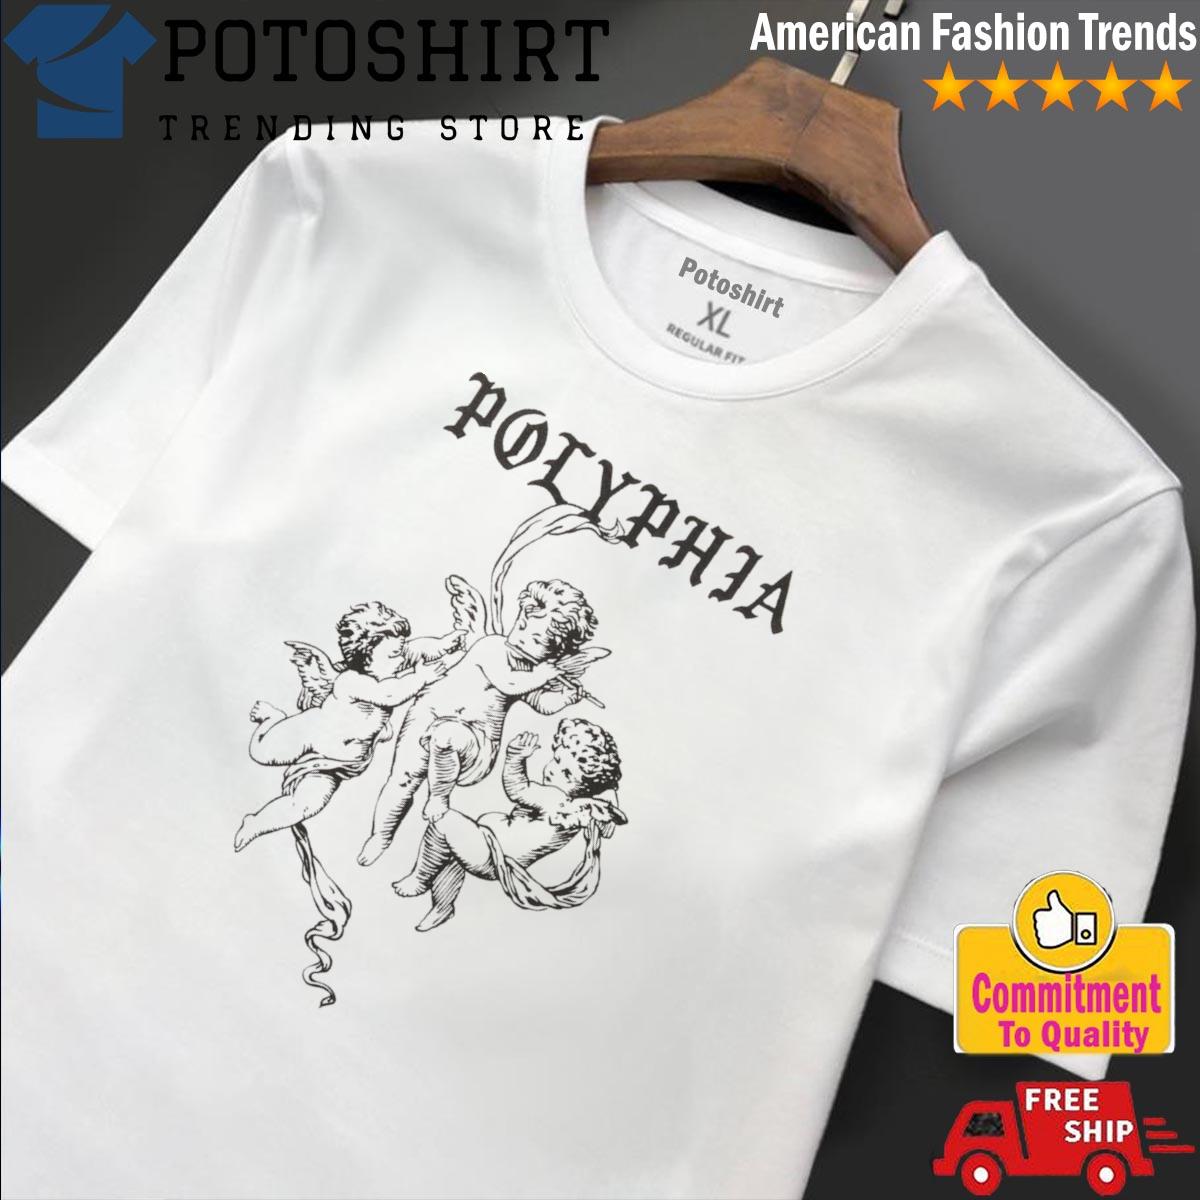 Polyphia baby angels shirt